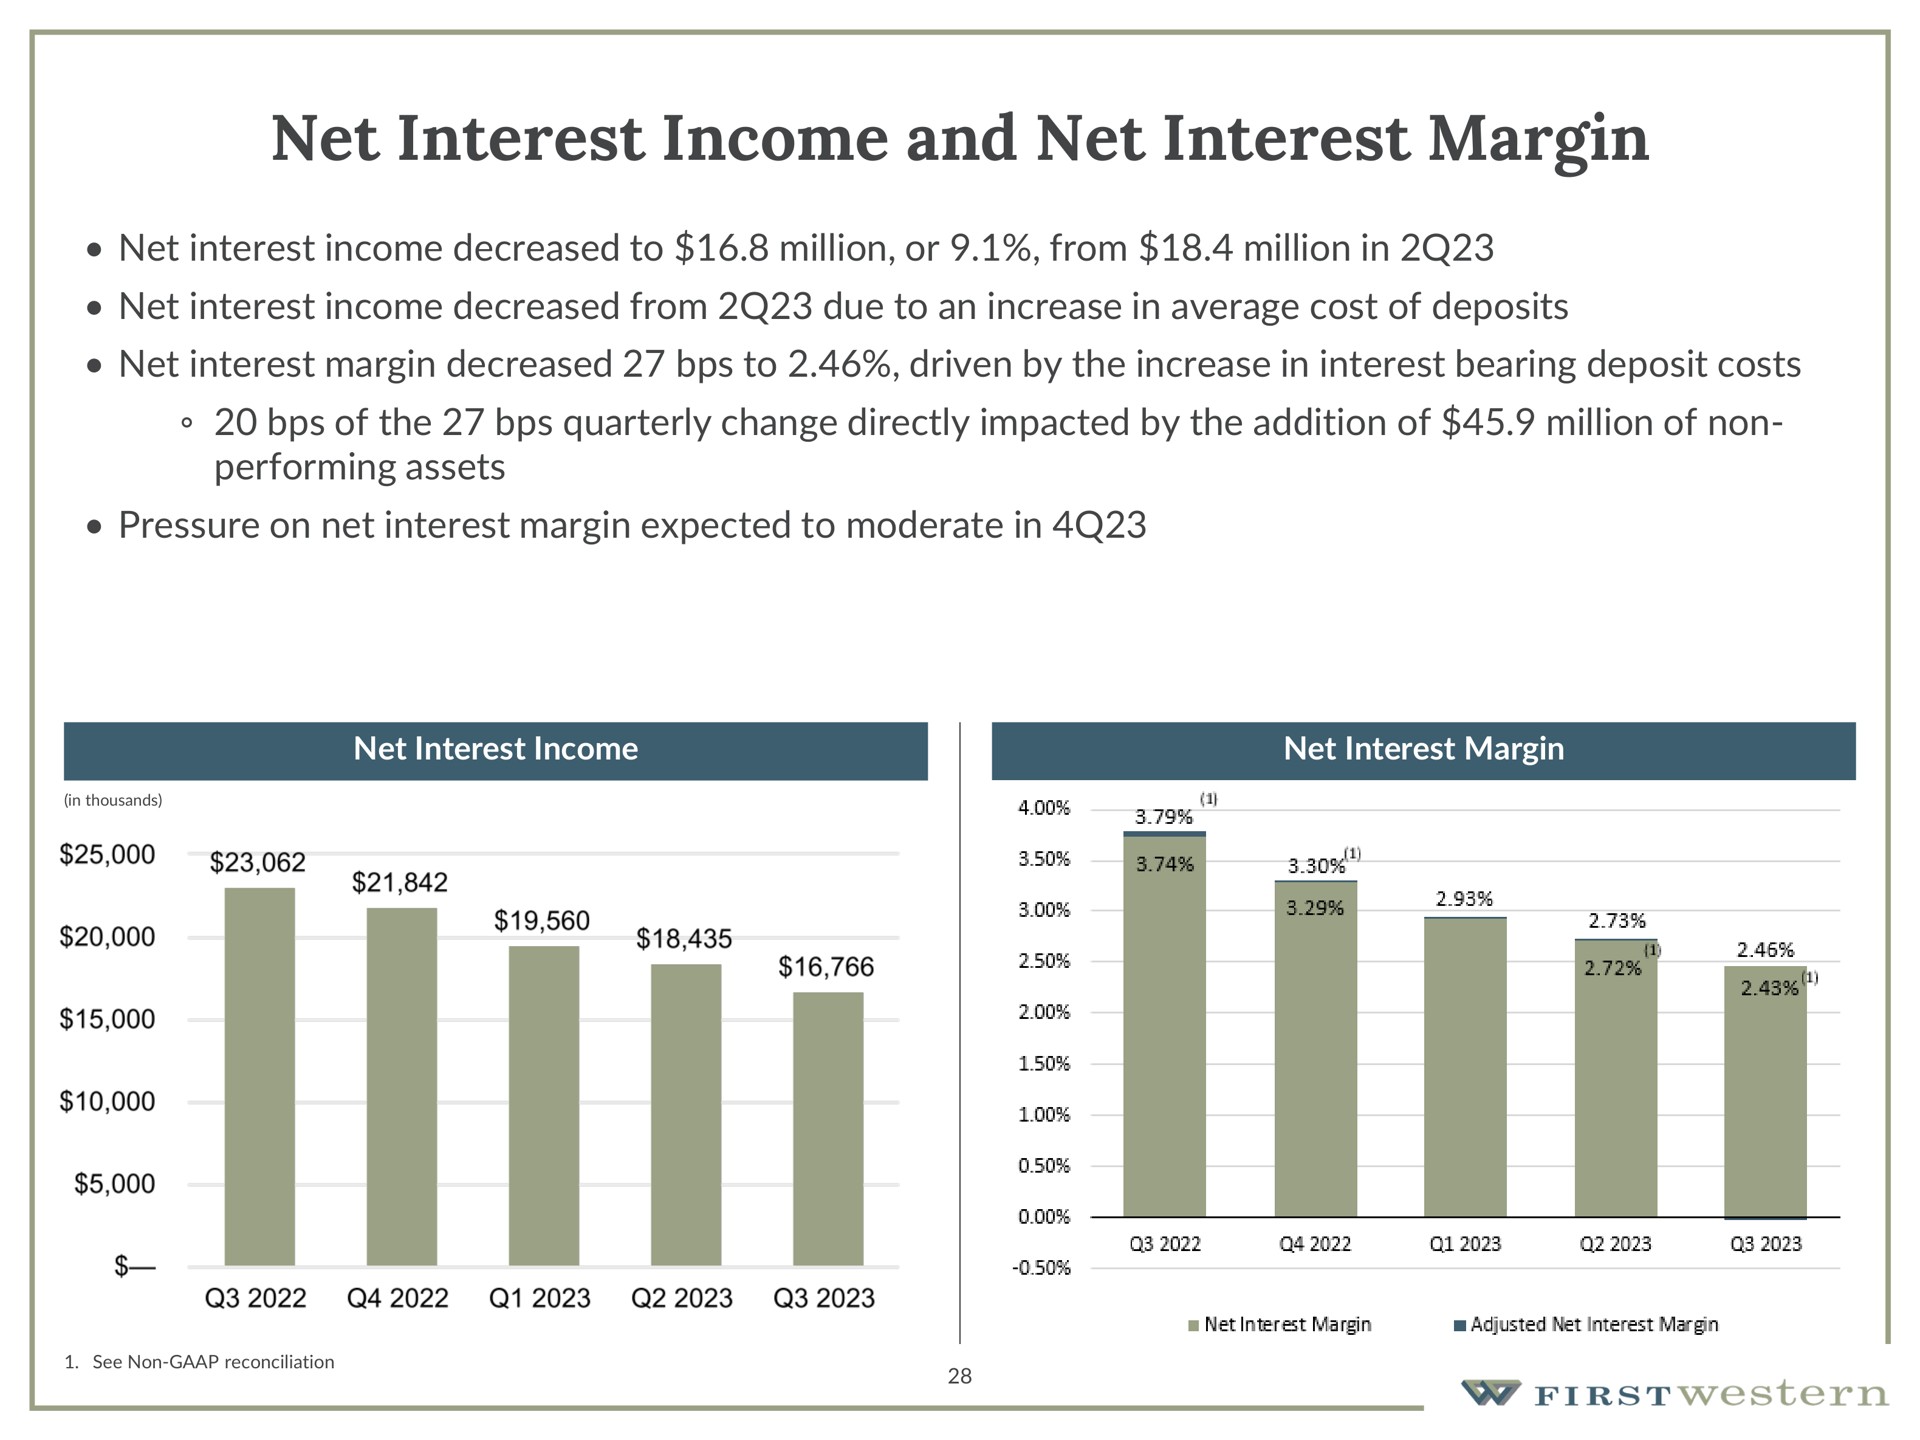 net interest income and net interest margin | First Western Financial